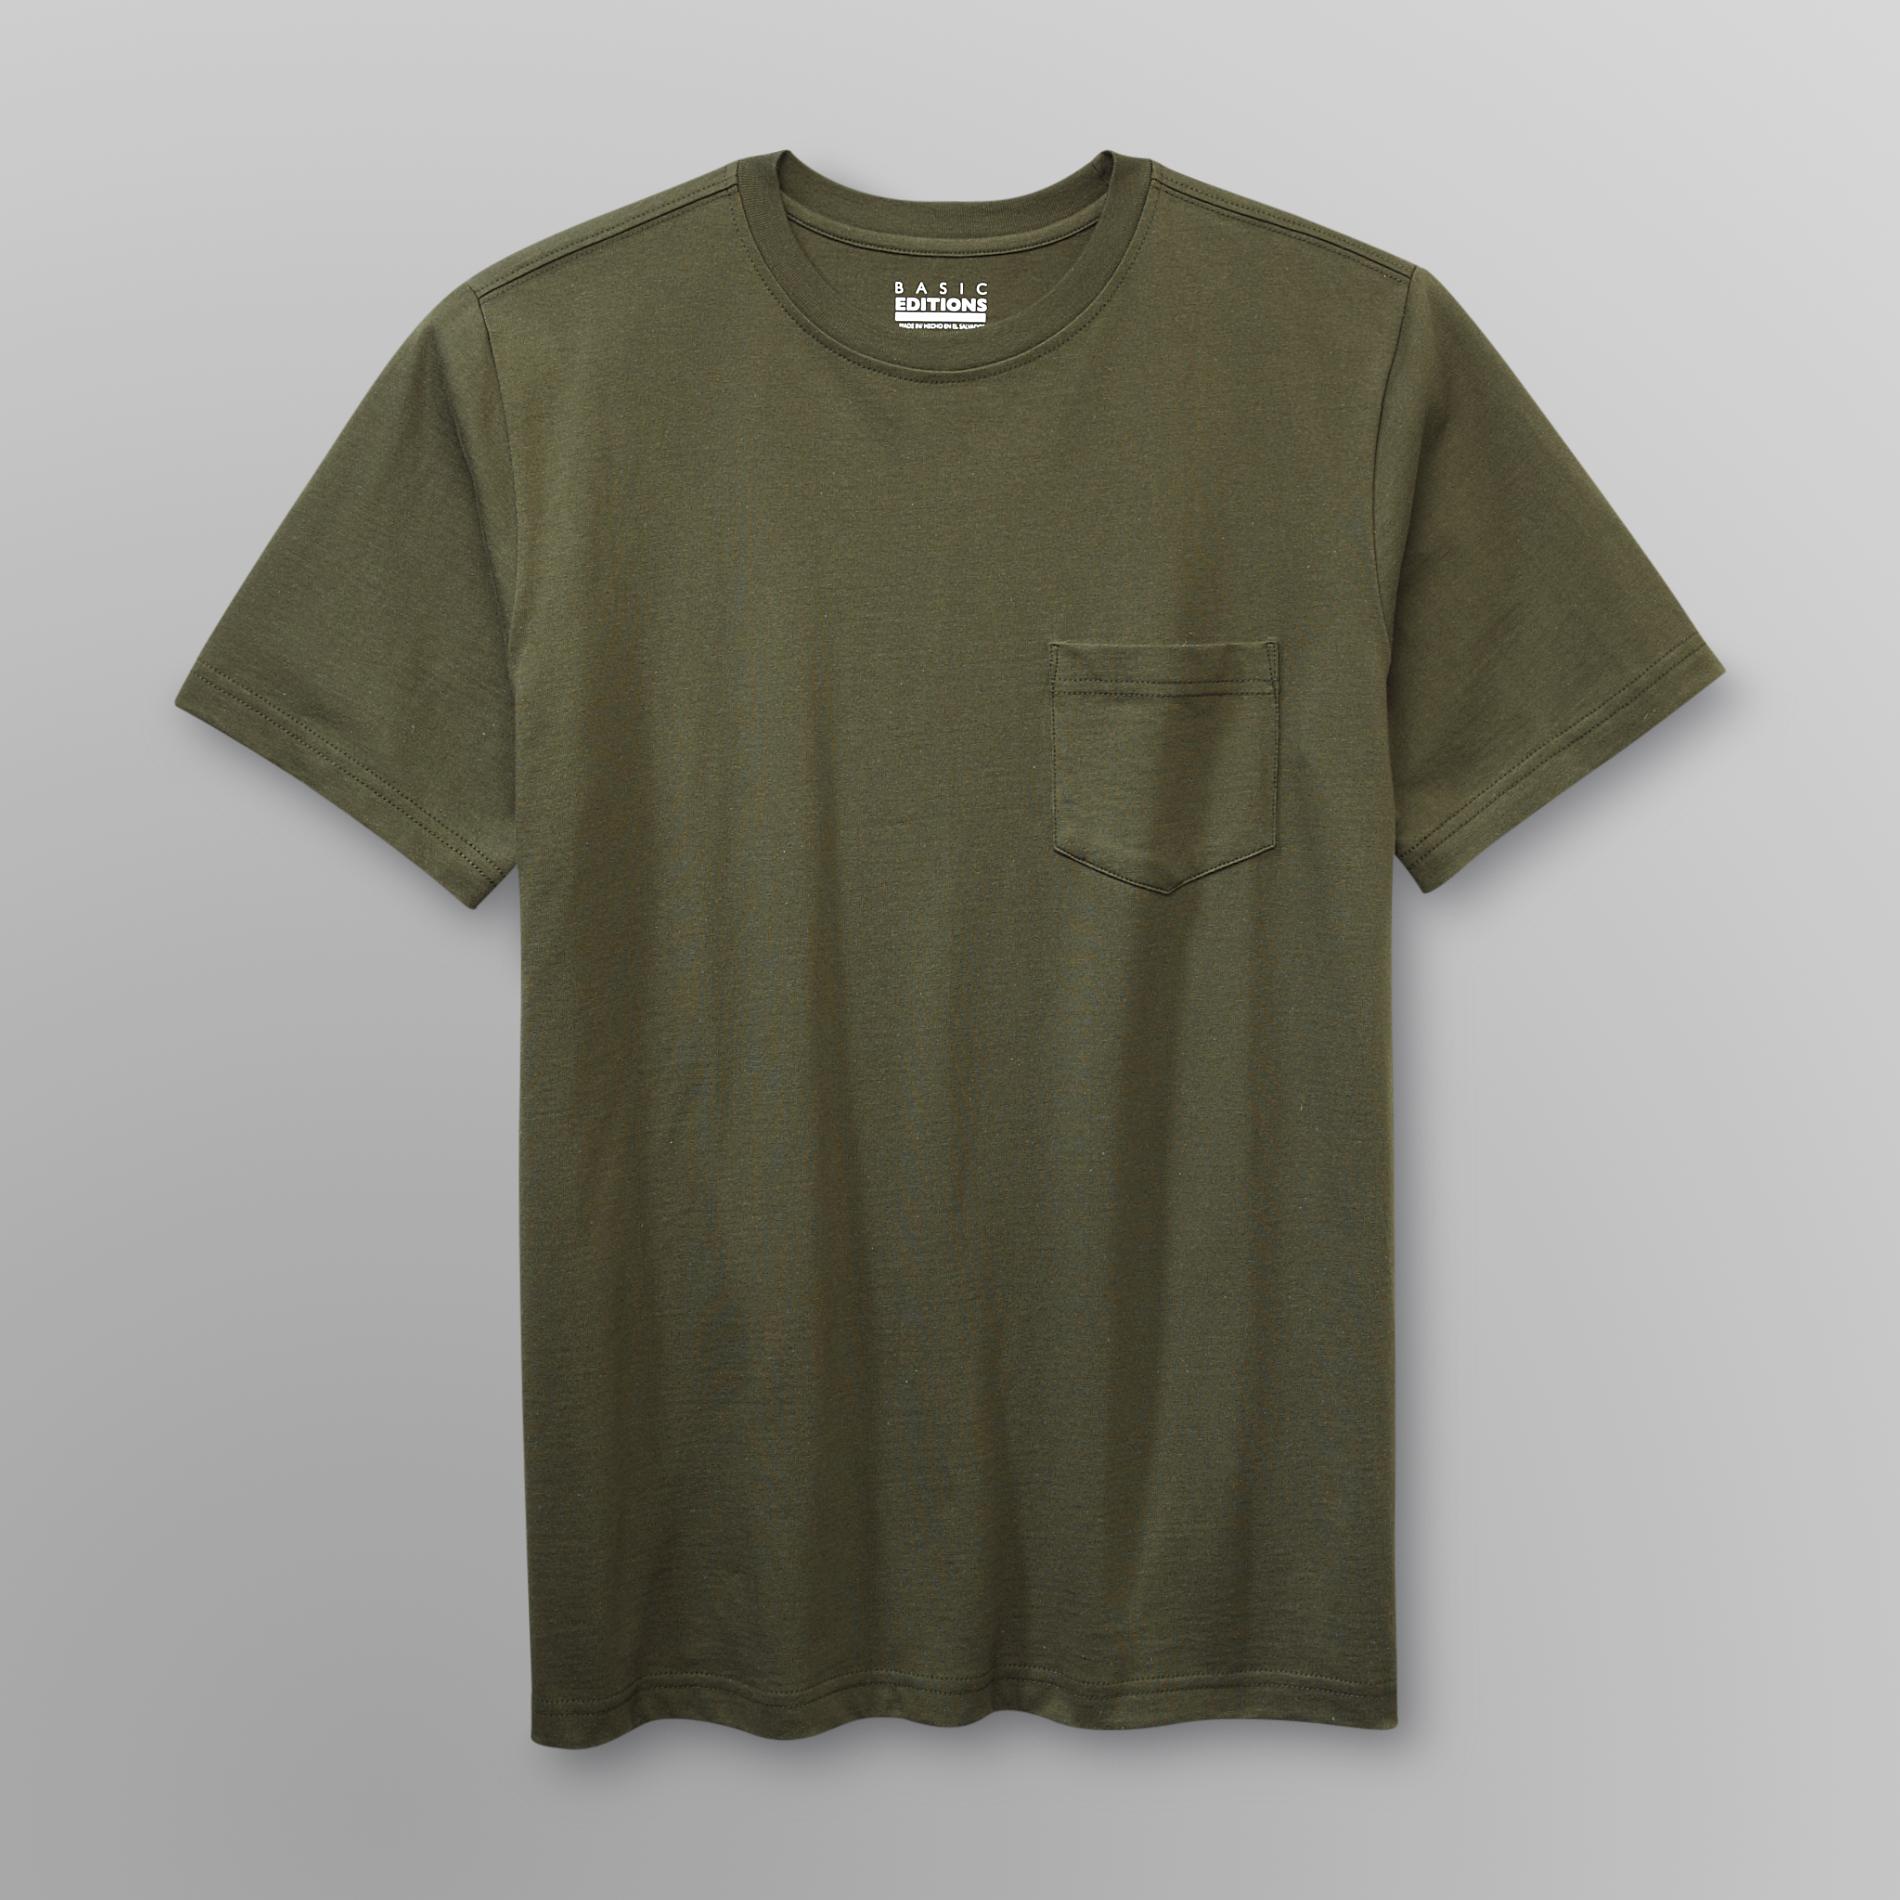 Basic Editions Men's Short-Sleeve Pocket T-Shirt